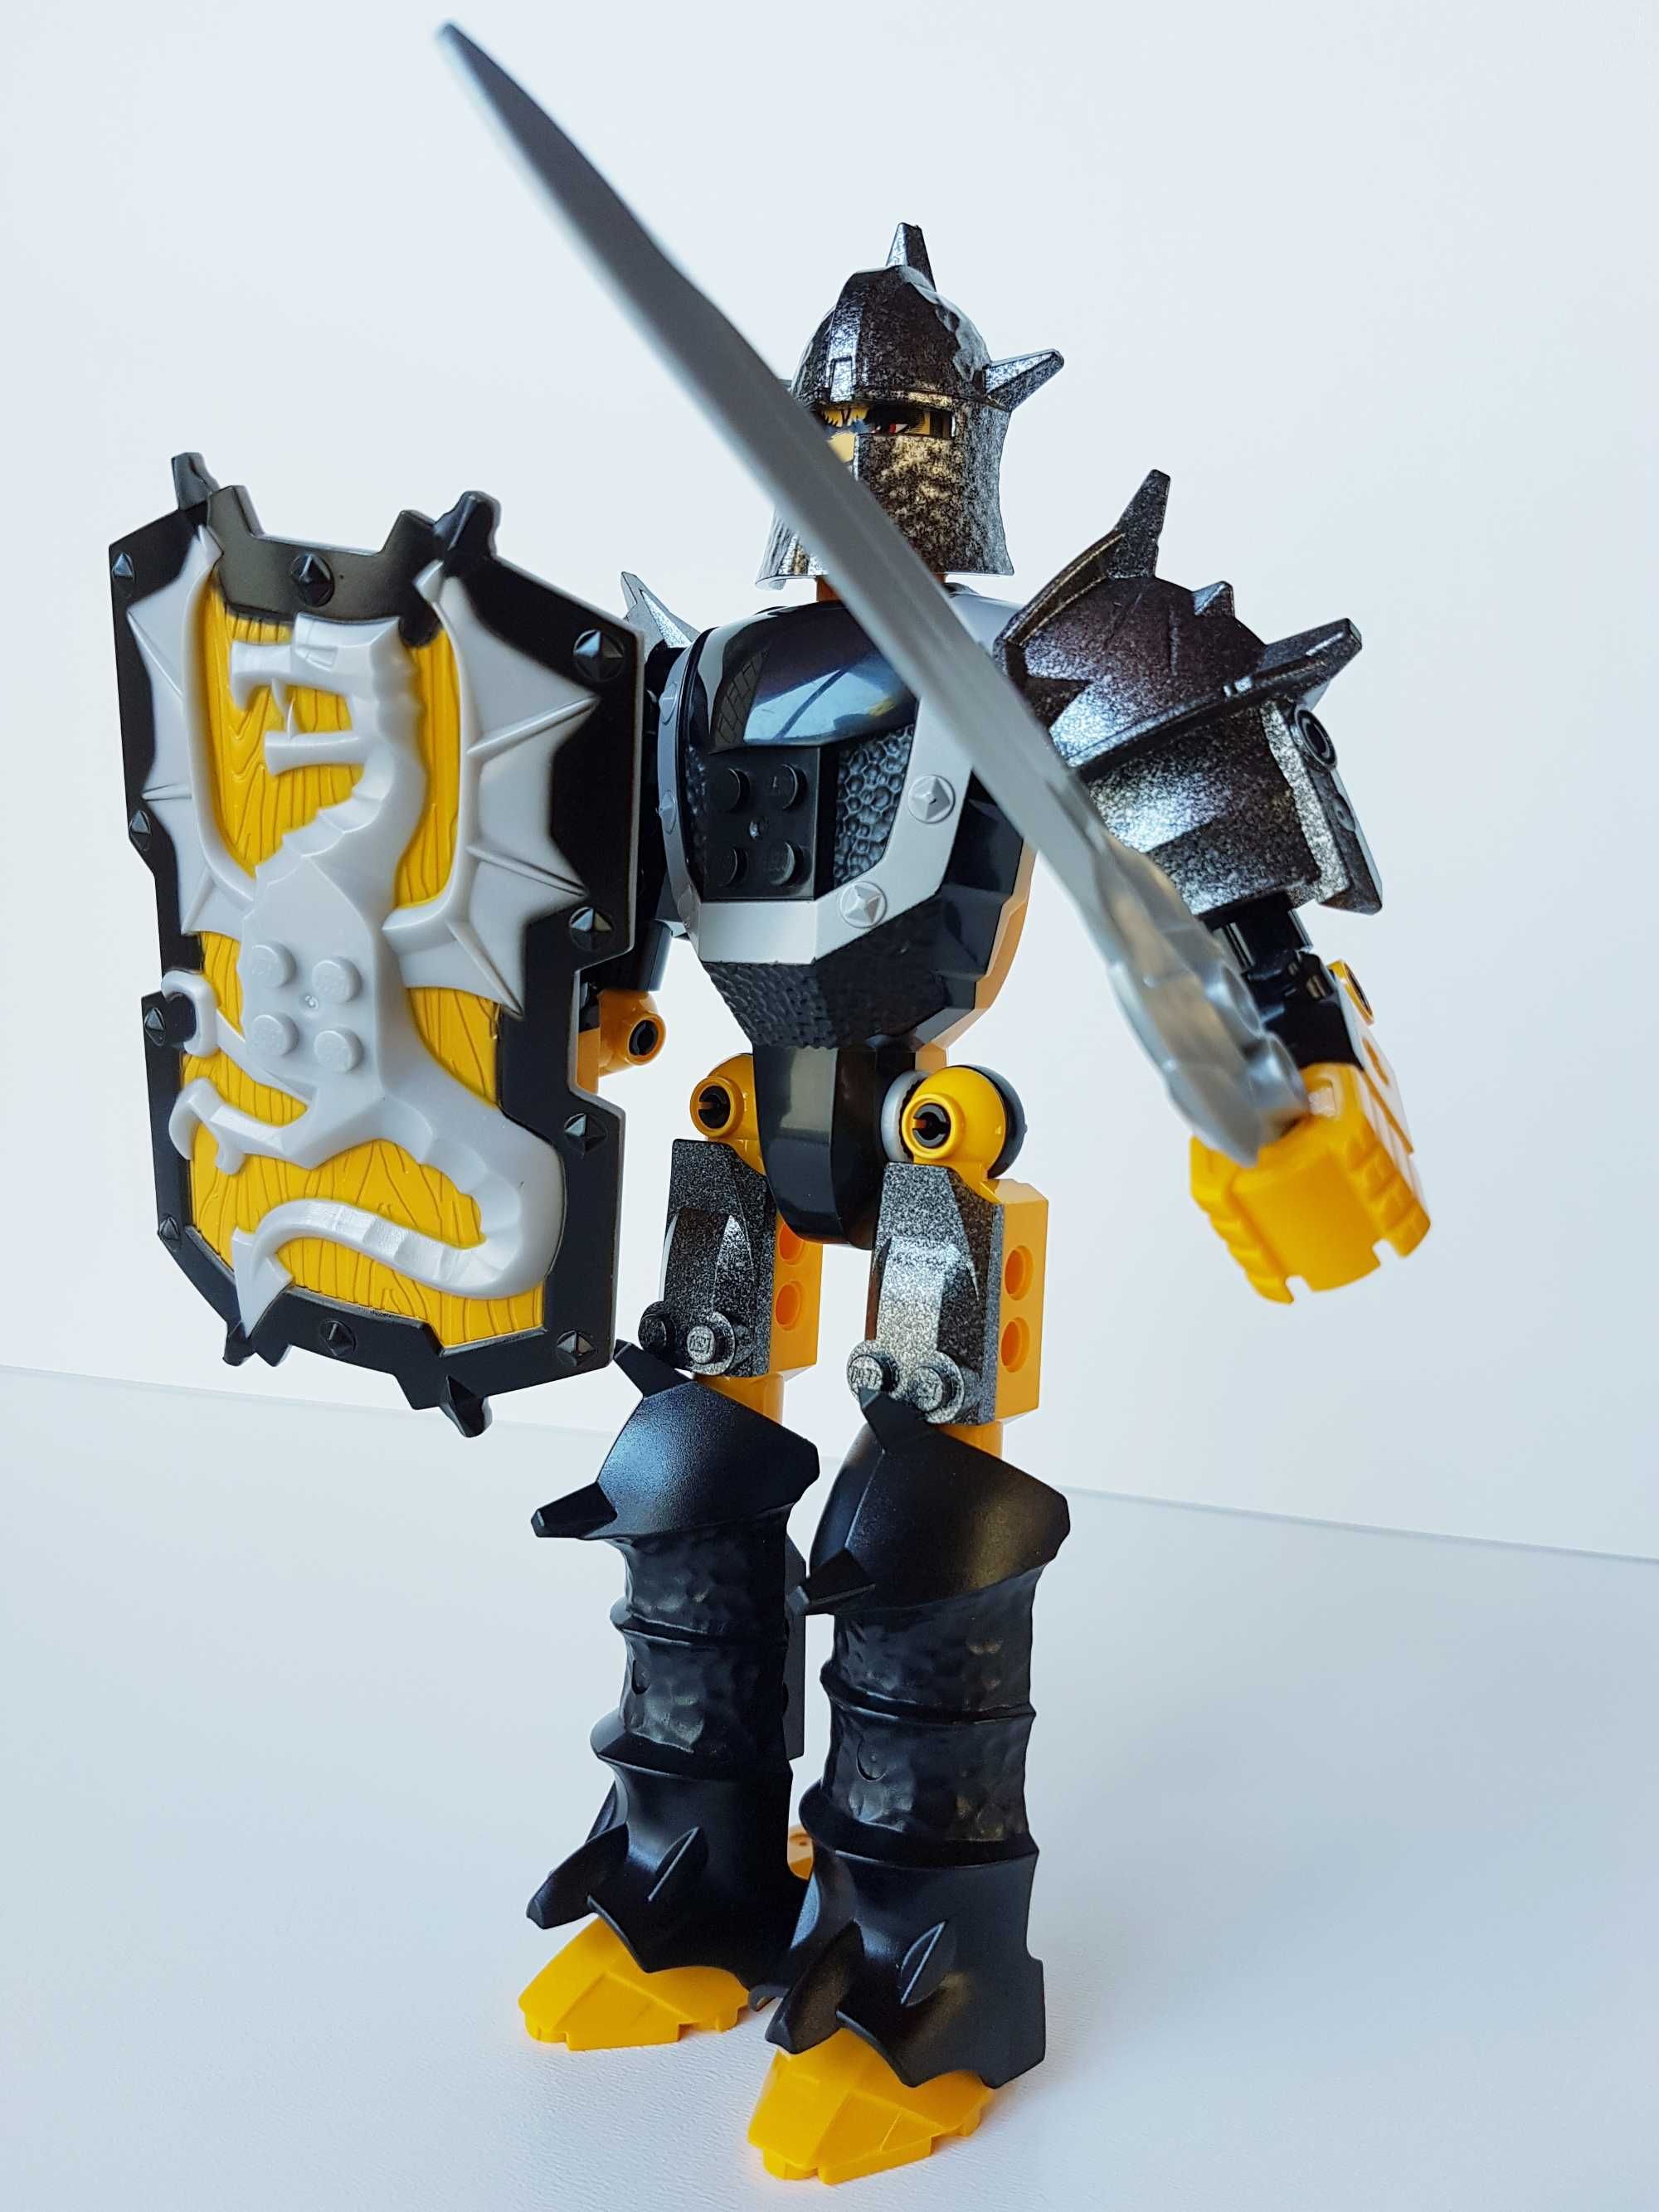 LEGO 8705 Knights Kingdom II Dracus